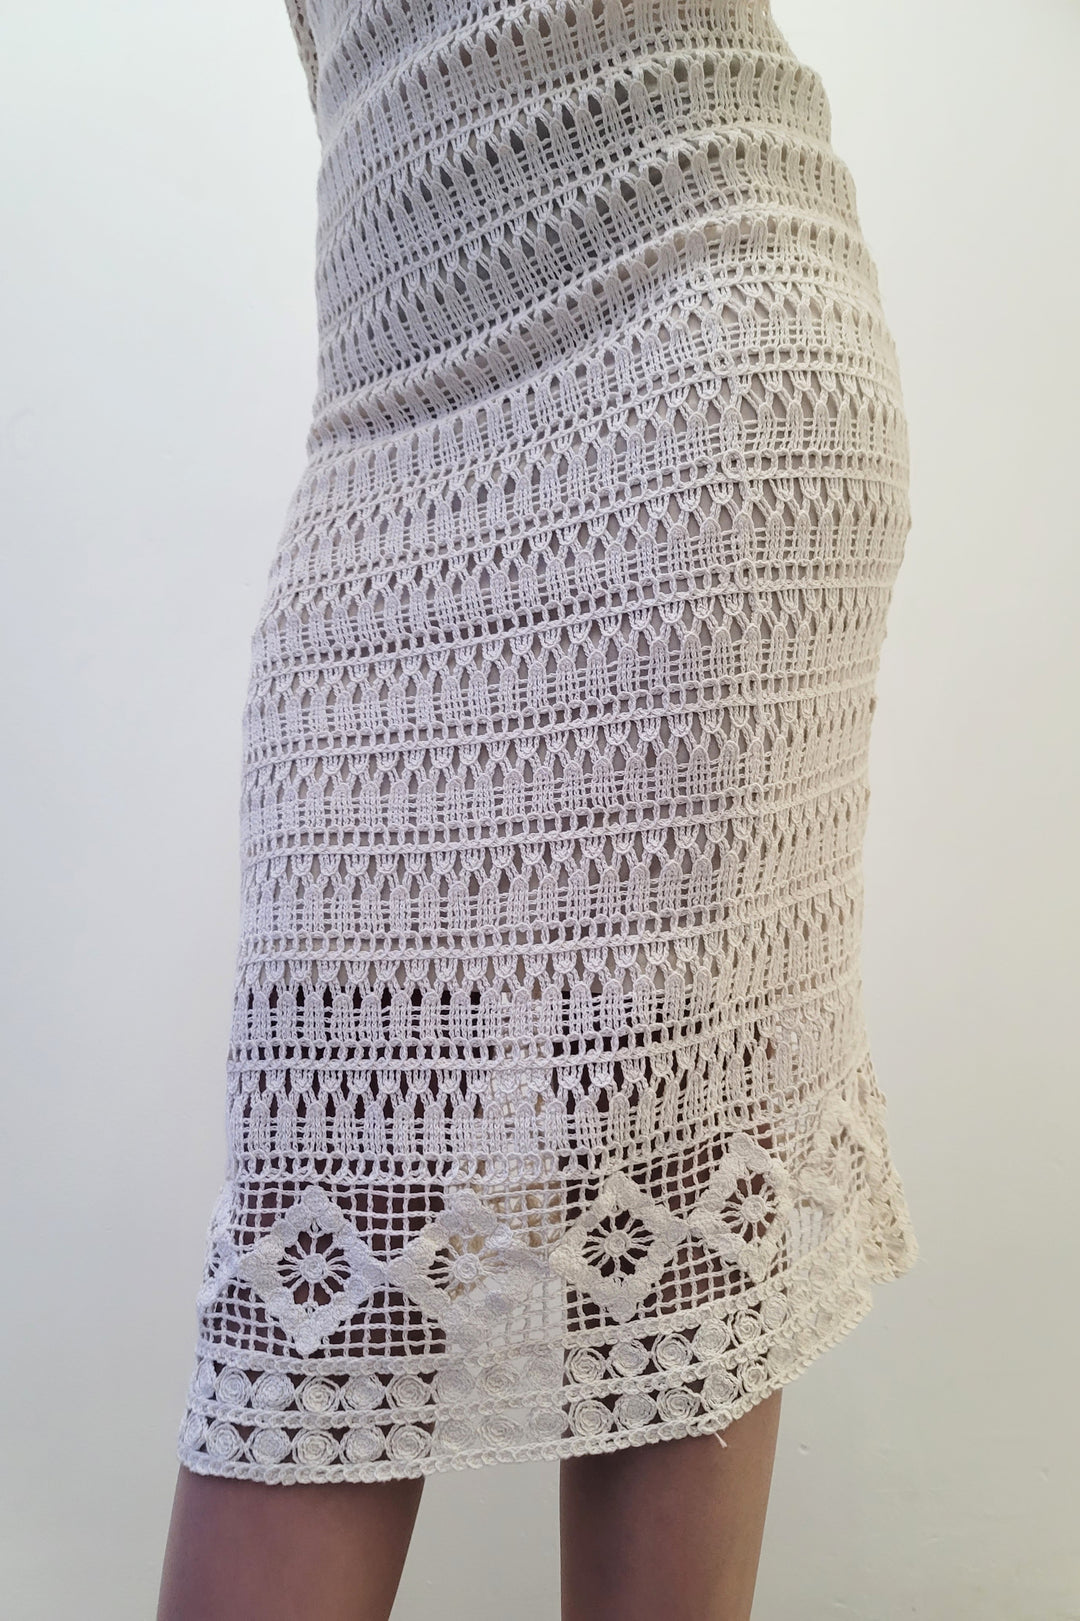 Lucy Paris Siesta Beige Crochet Dress